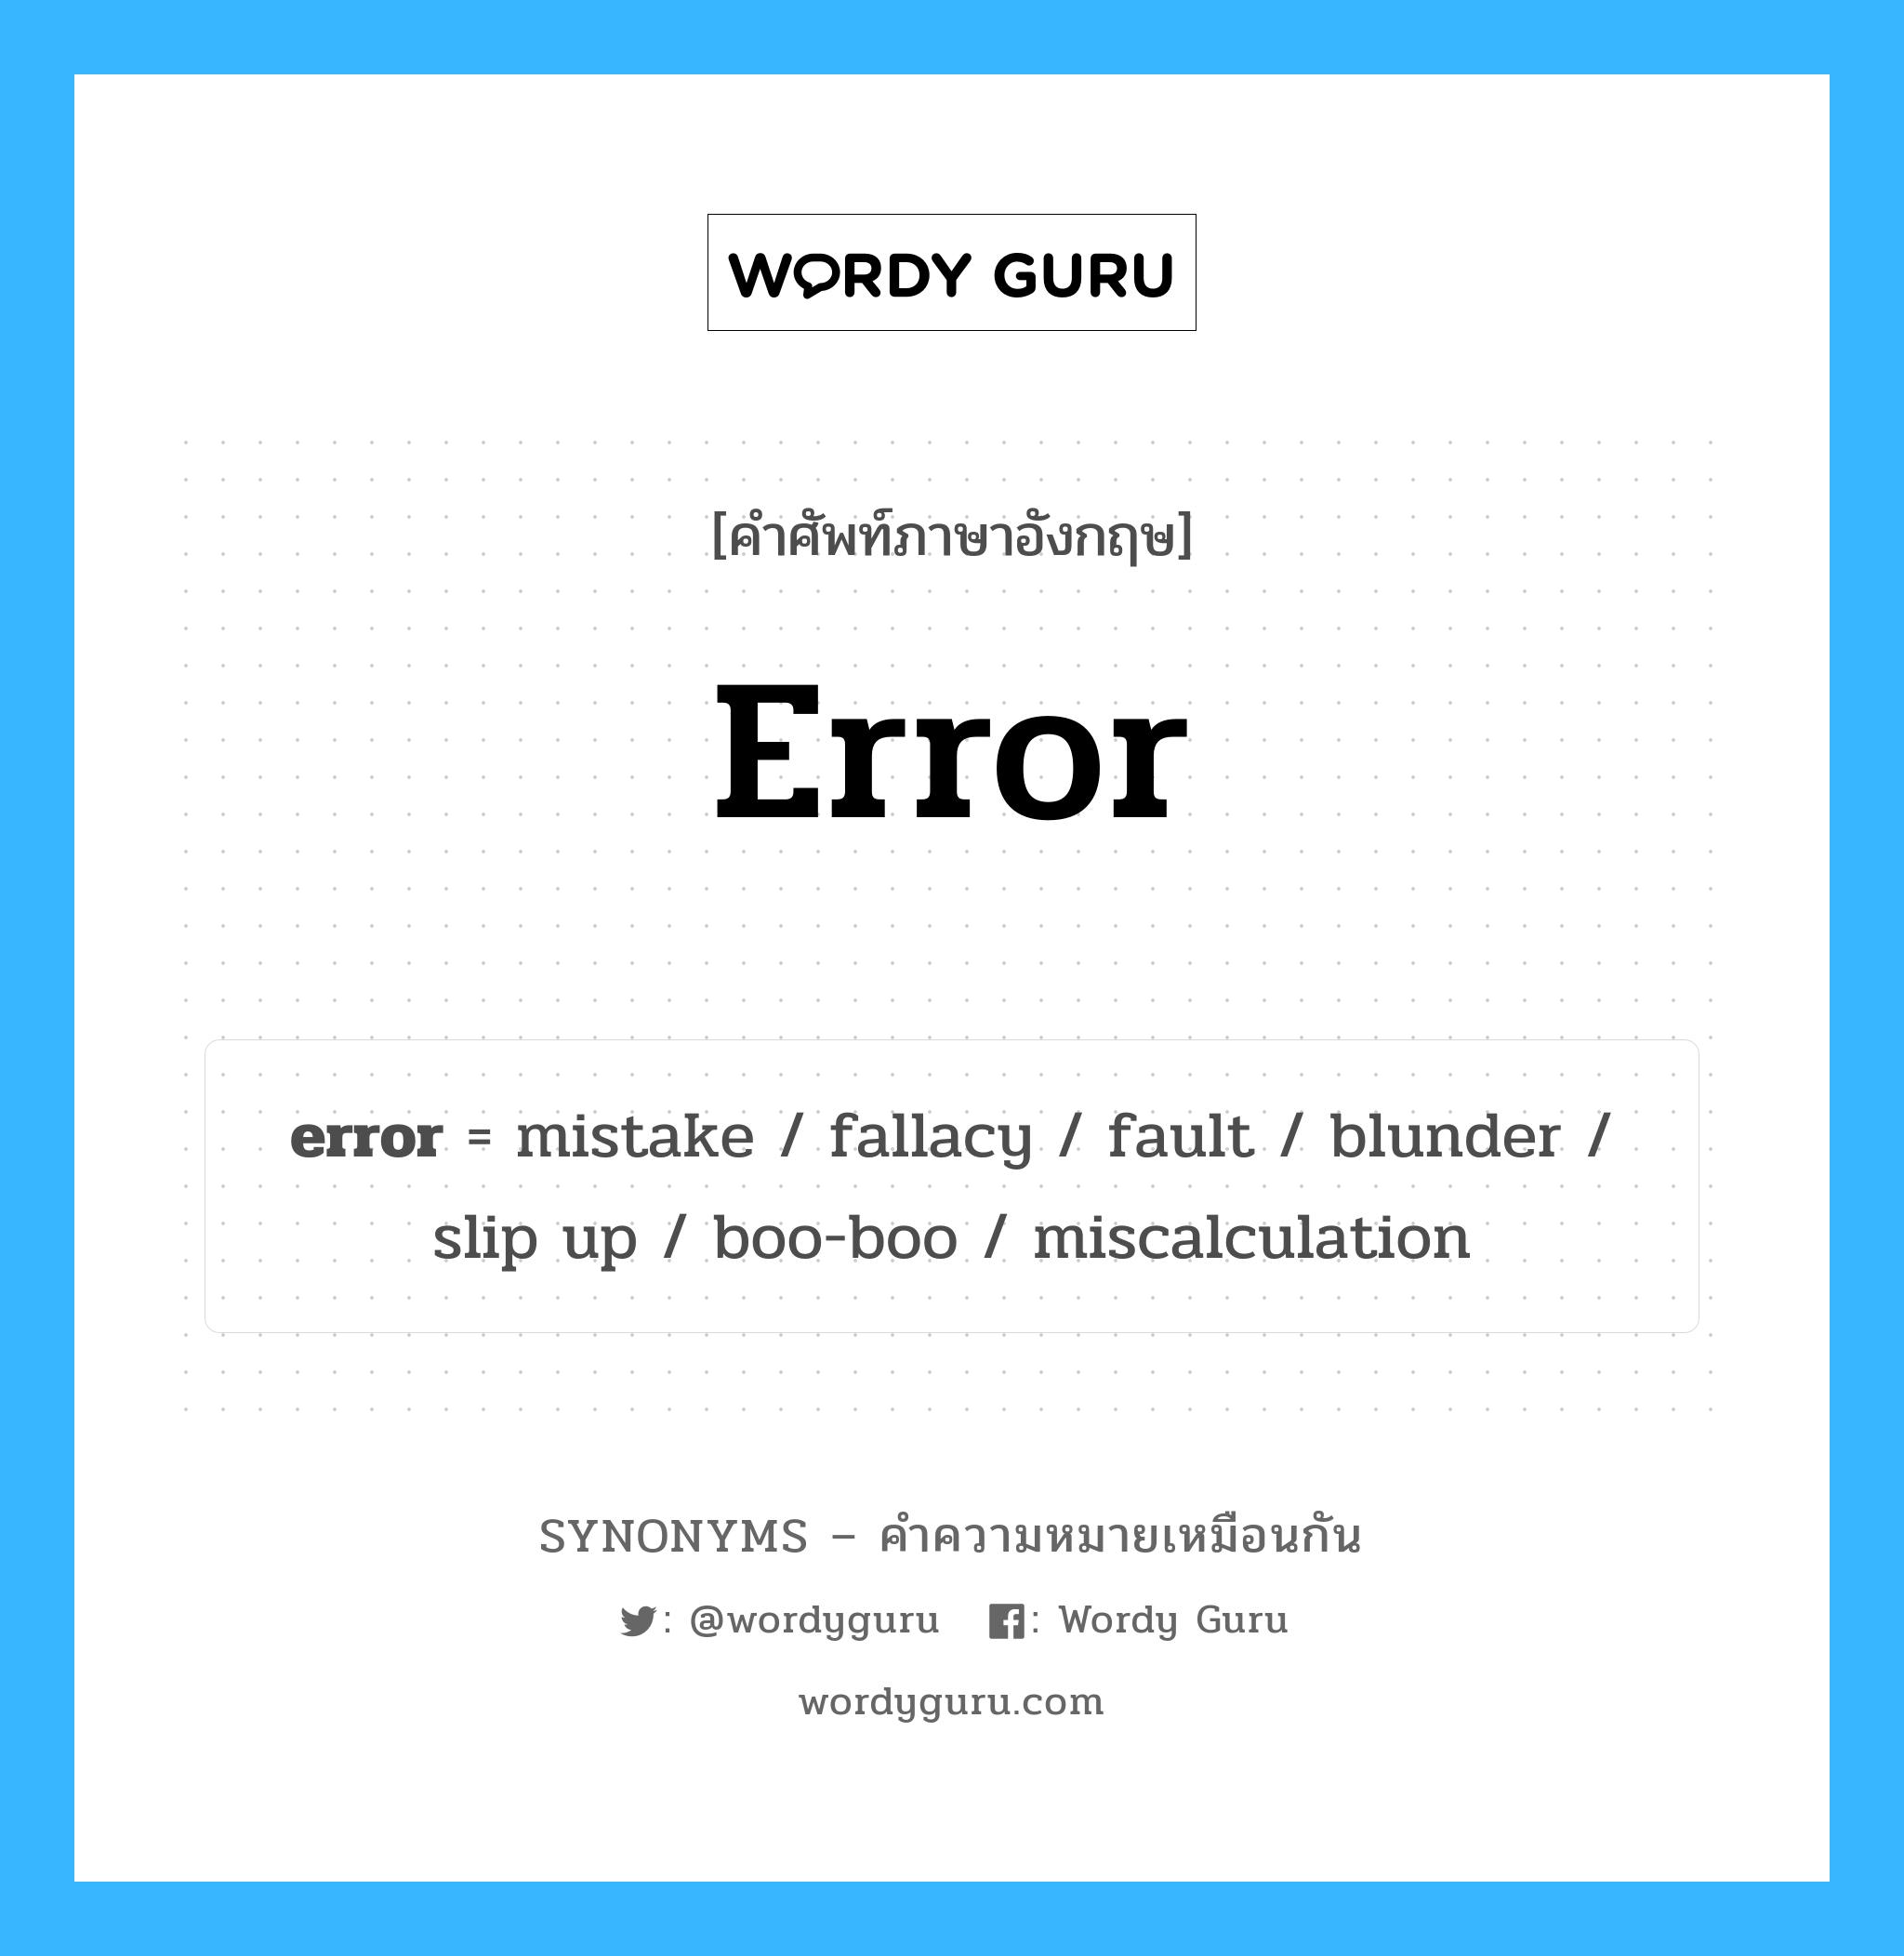 error เป็นหนึ่งใน mistake และมีคำอื่น ๆ อีกดังนี้, คำศัพท์ภาษาอังกฤษ error ความหมายคล้ายกันกับ mistake แปลว่า ความผิดพลาด หมวด mistake